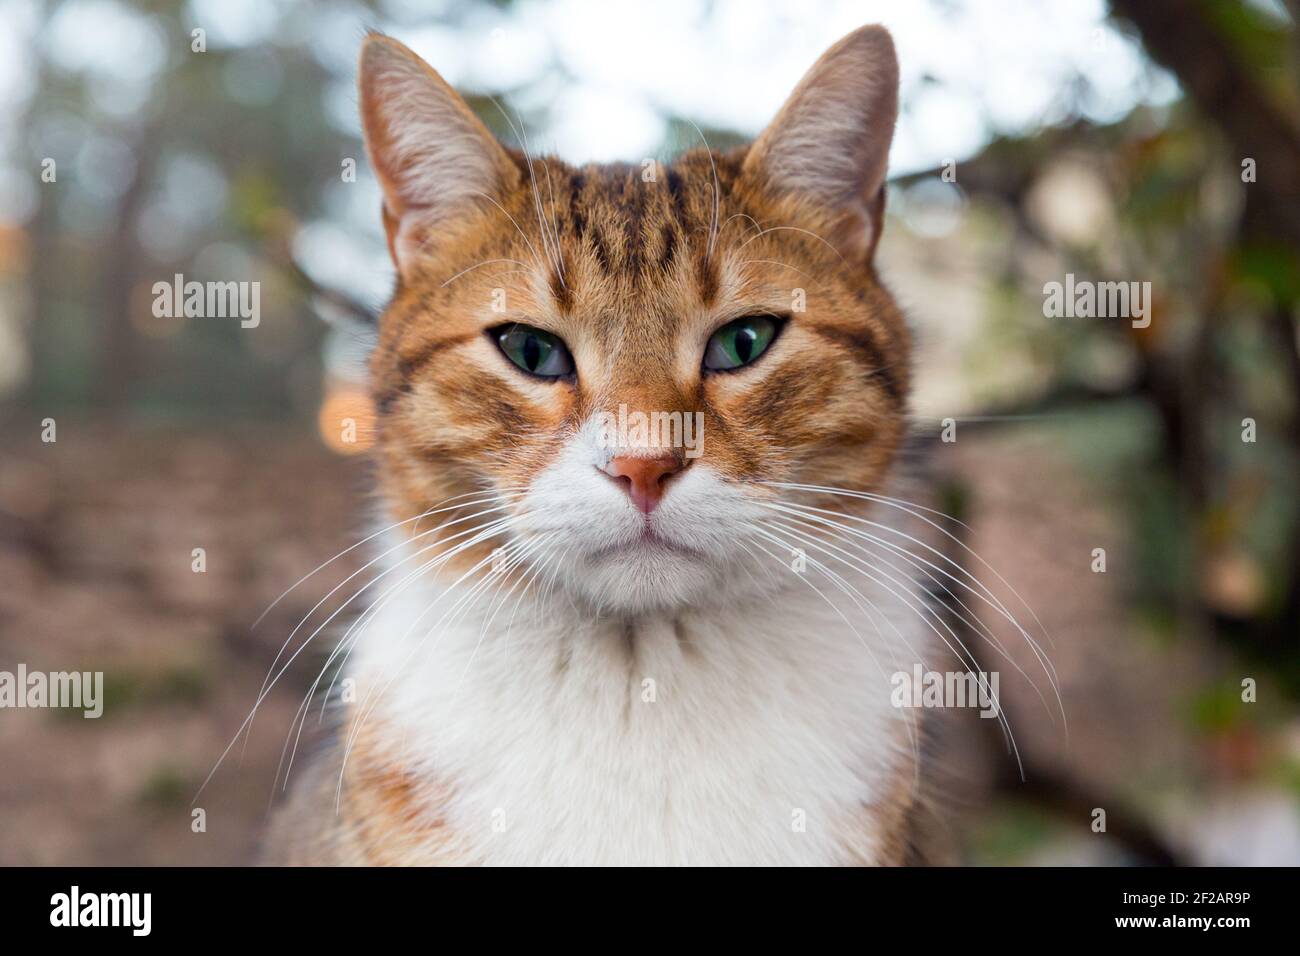 Head portrait of a slanted eye tabby cat outdoors Stock Photo